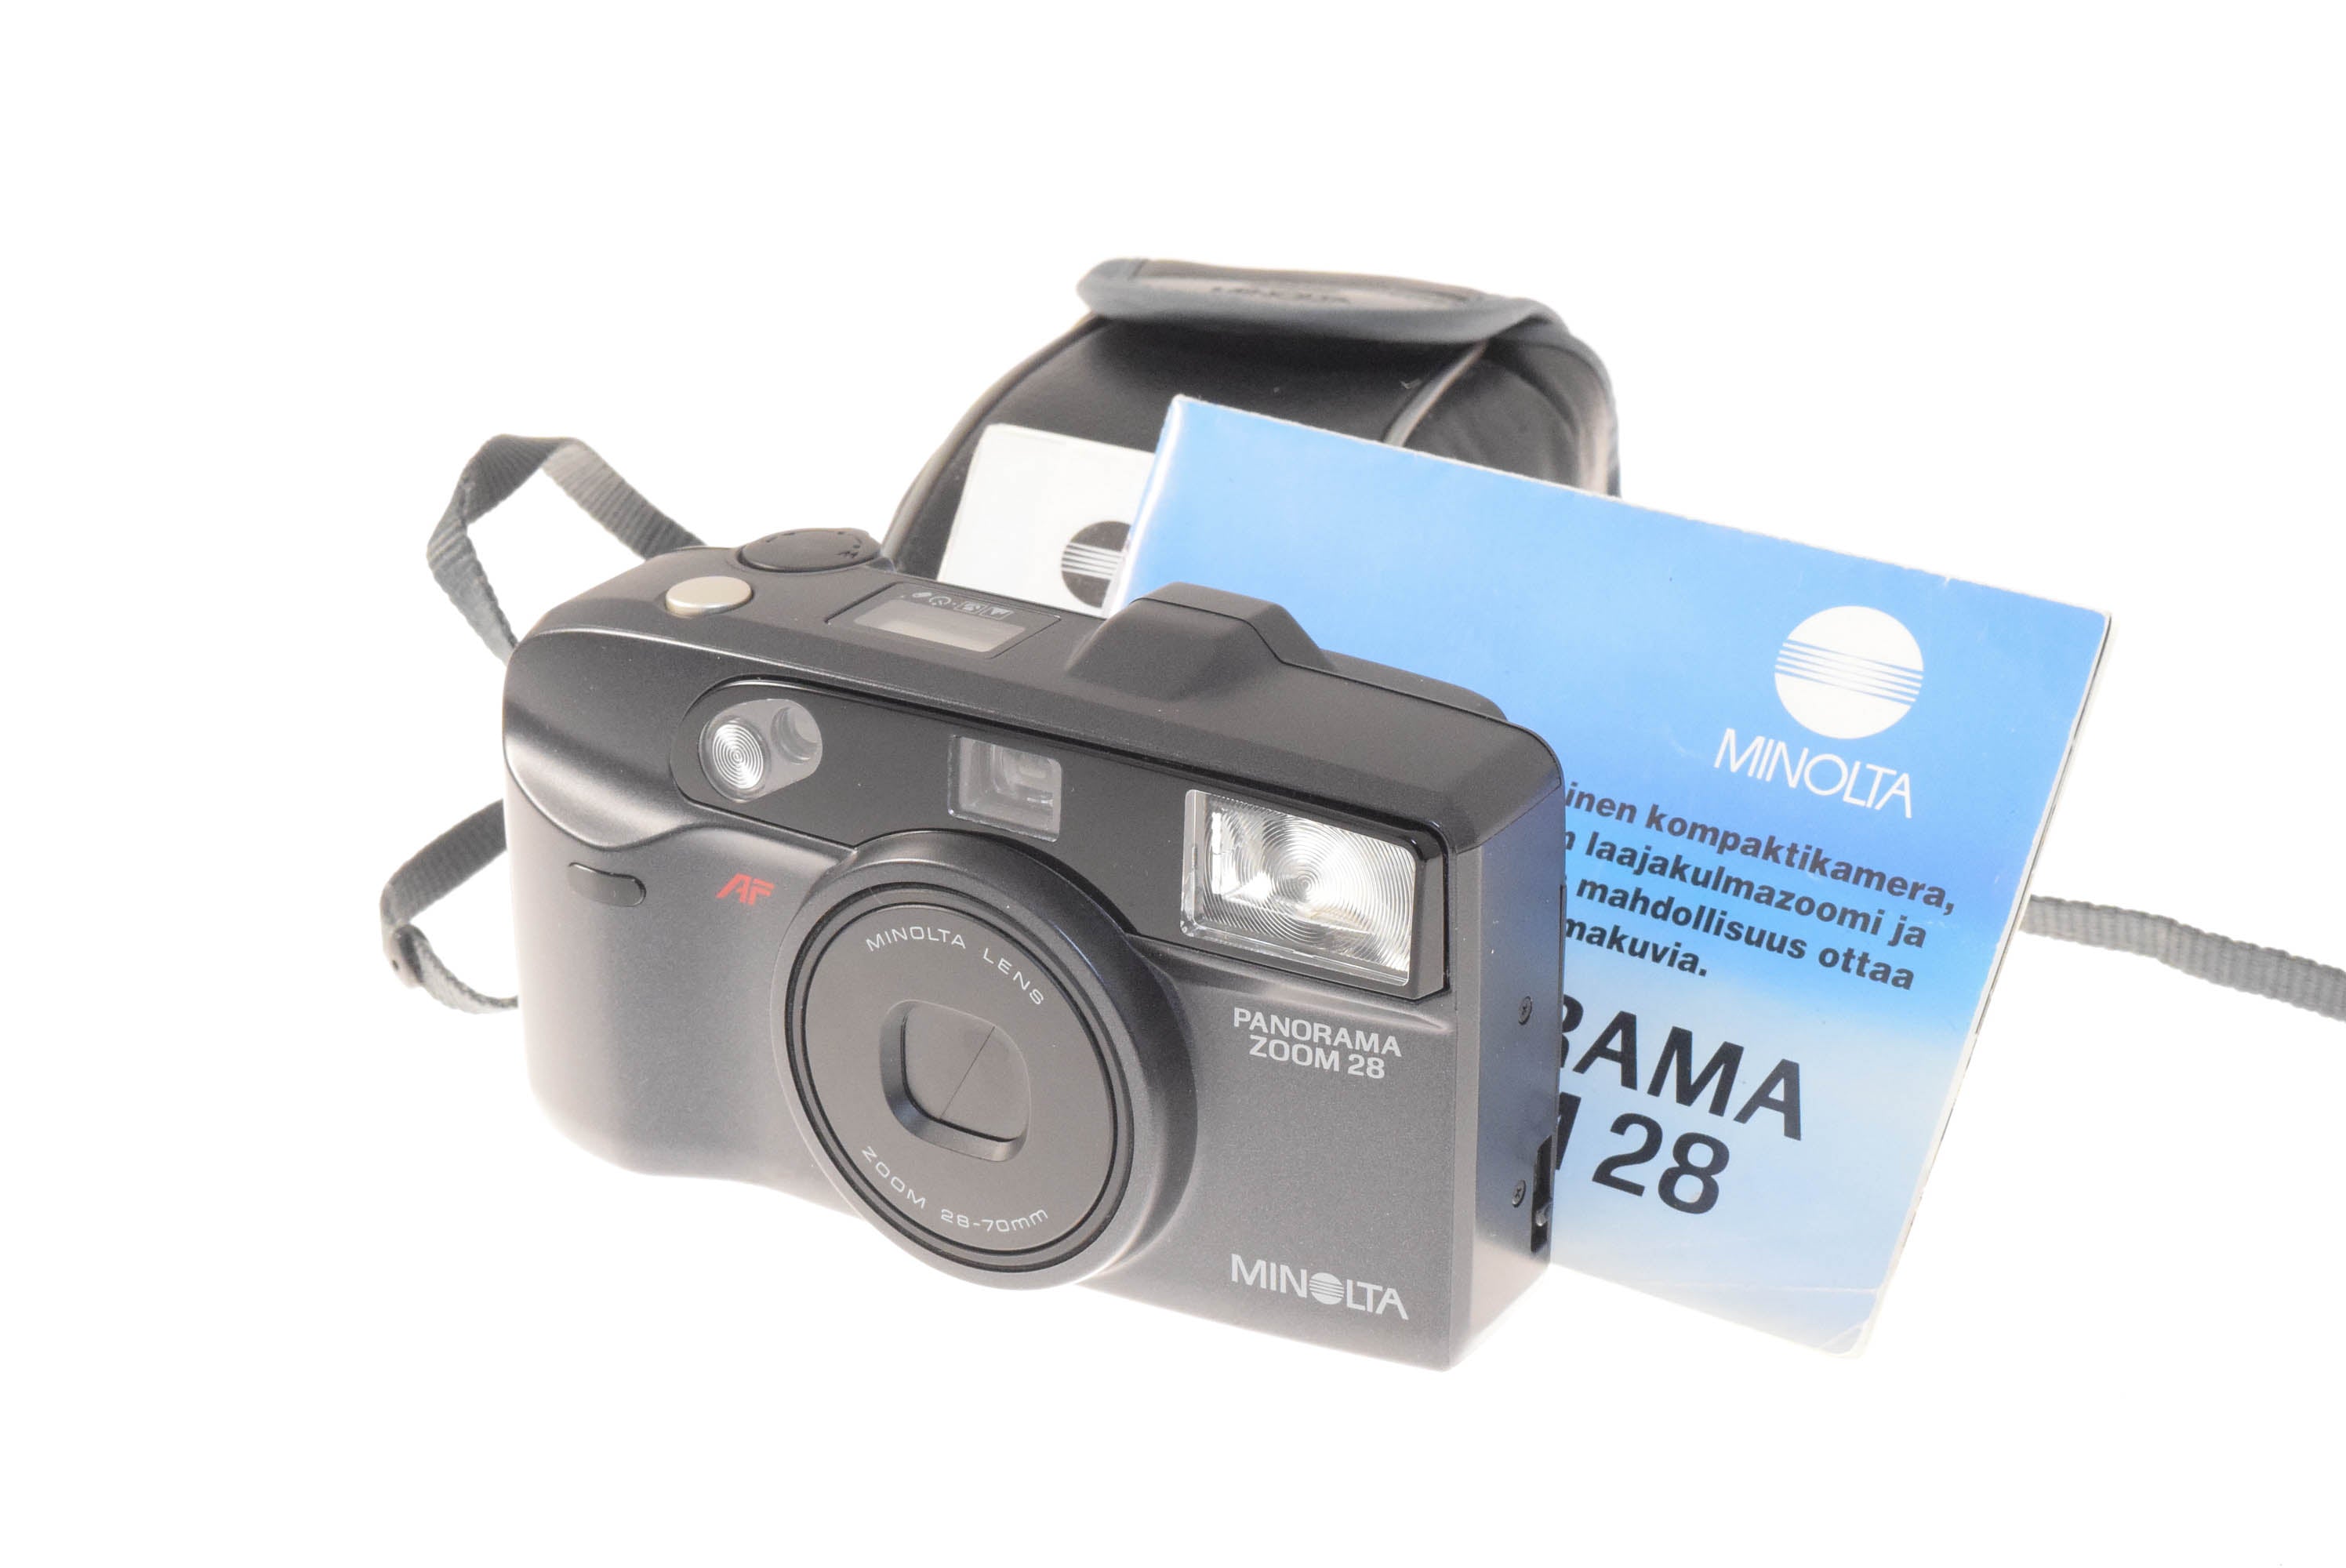 Minolta Panorama Zoom 28 - Camera – Kamerastore